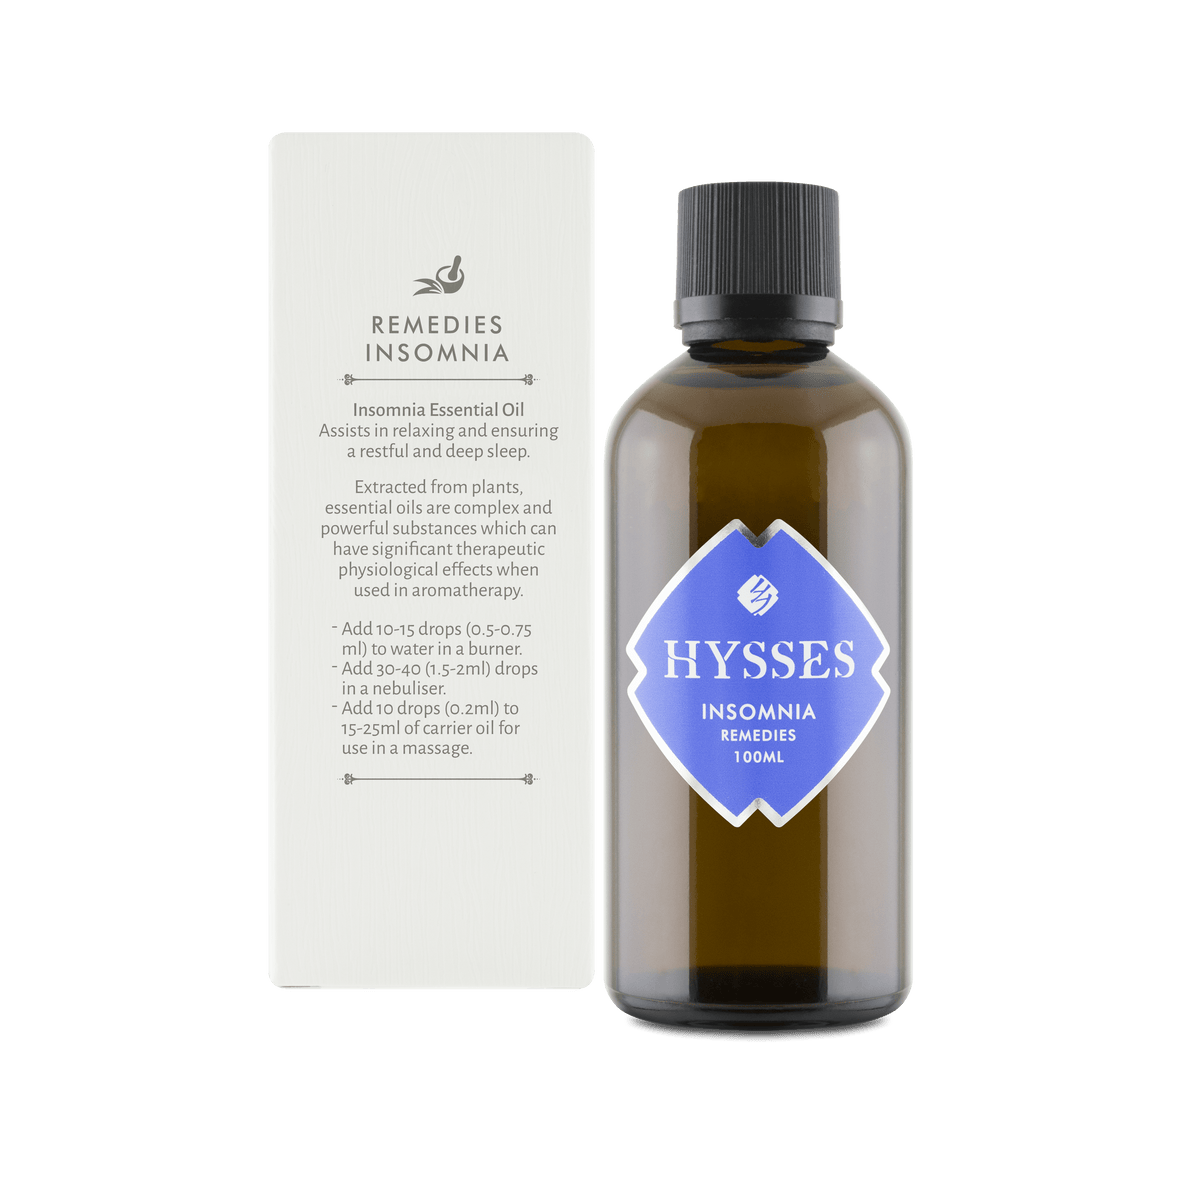 Hysses Essential Oil Remedies, Insomnia (Lavender &amp; Sandalwood)